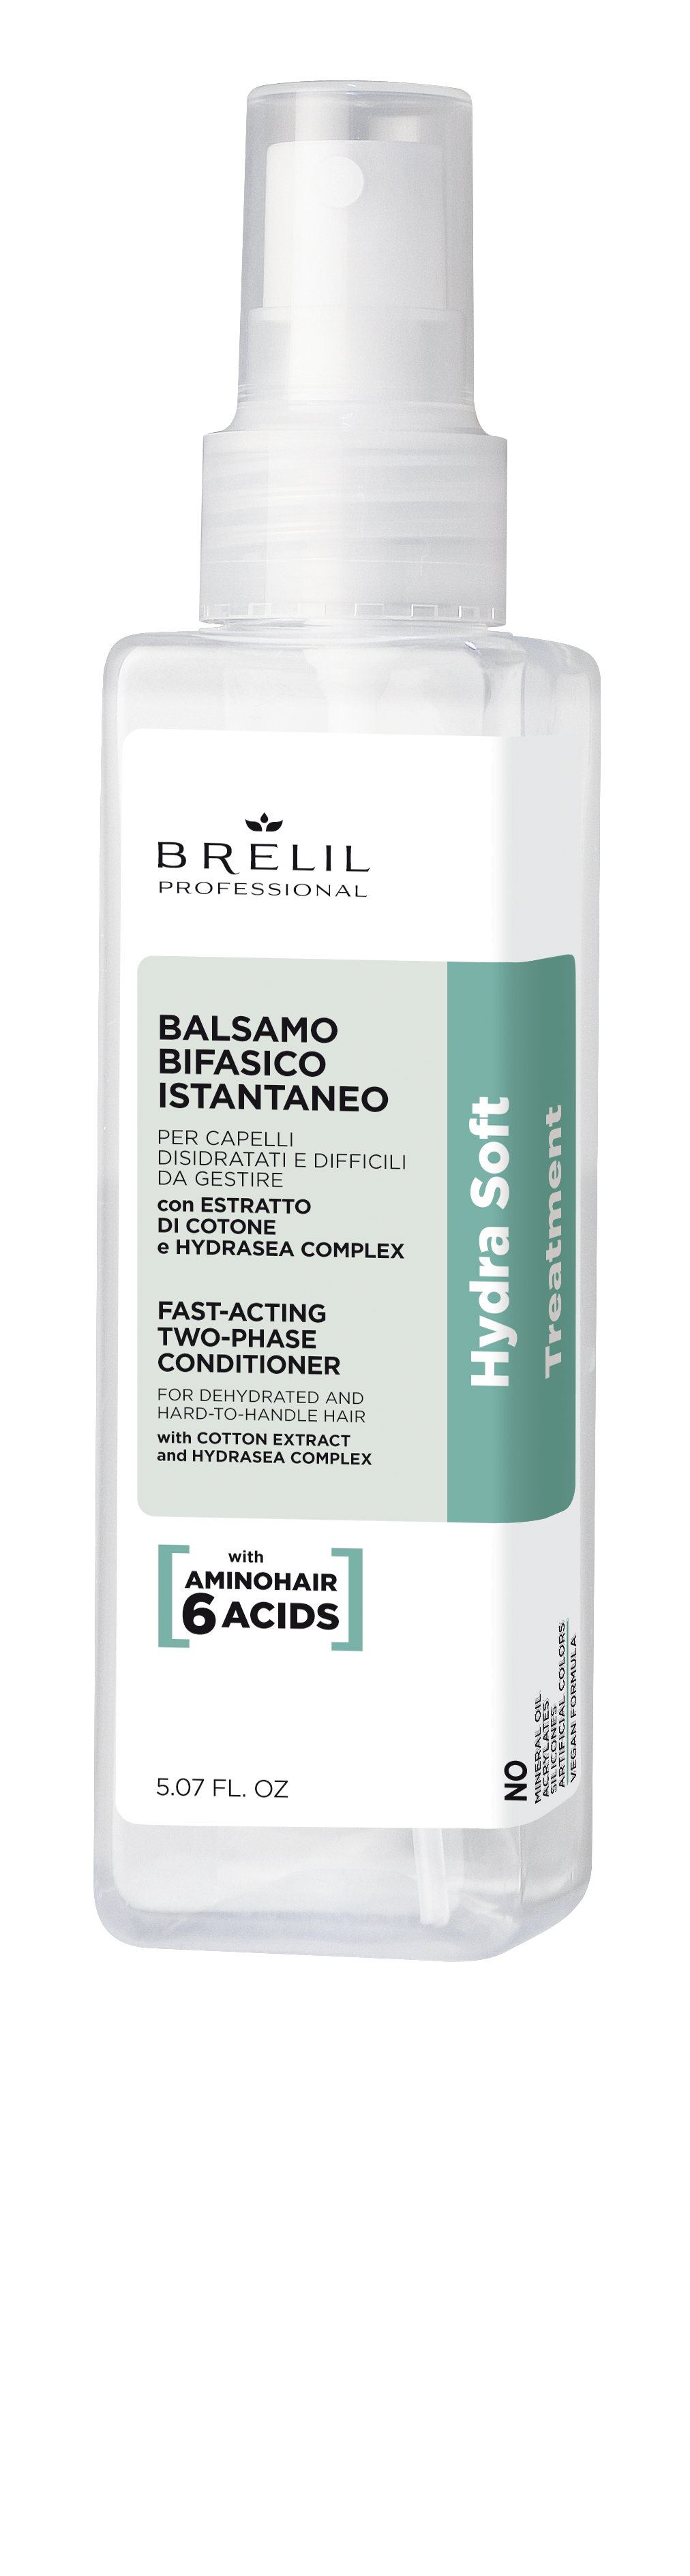 Hydra Soft Treatment BALSAMO BIFASICO ISTANTANEO